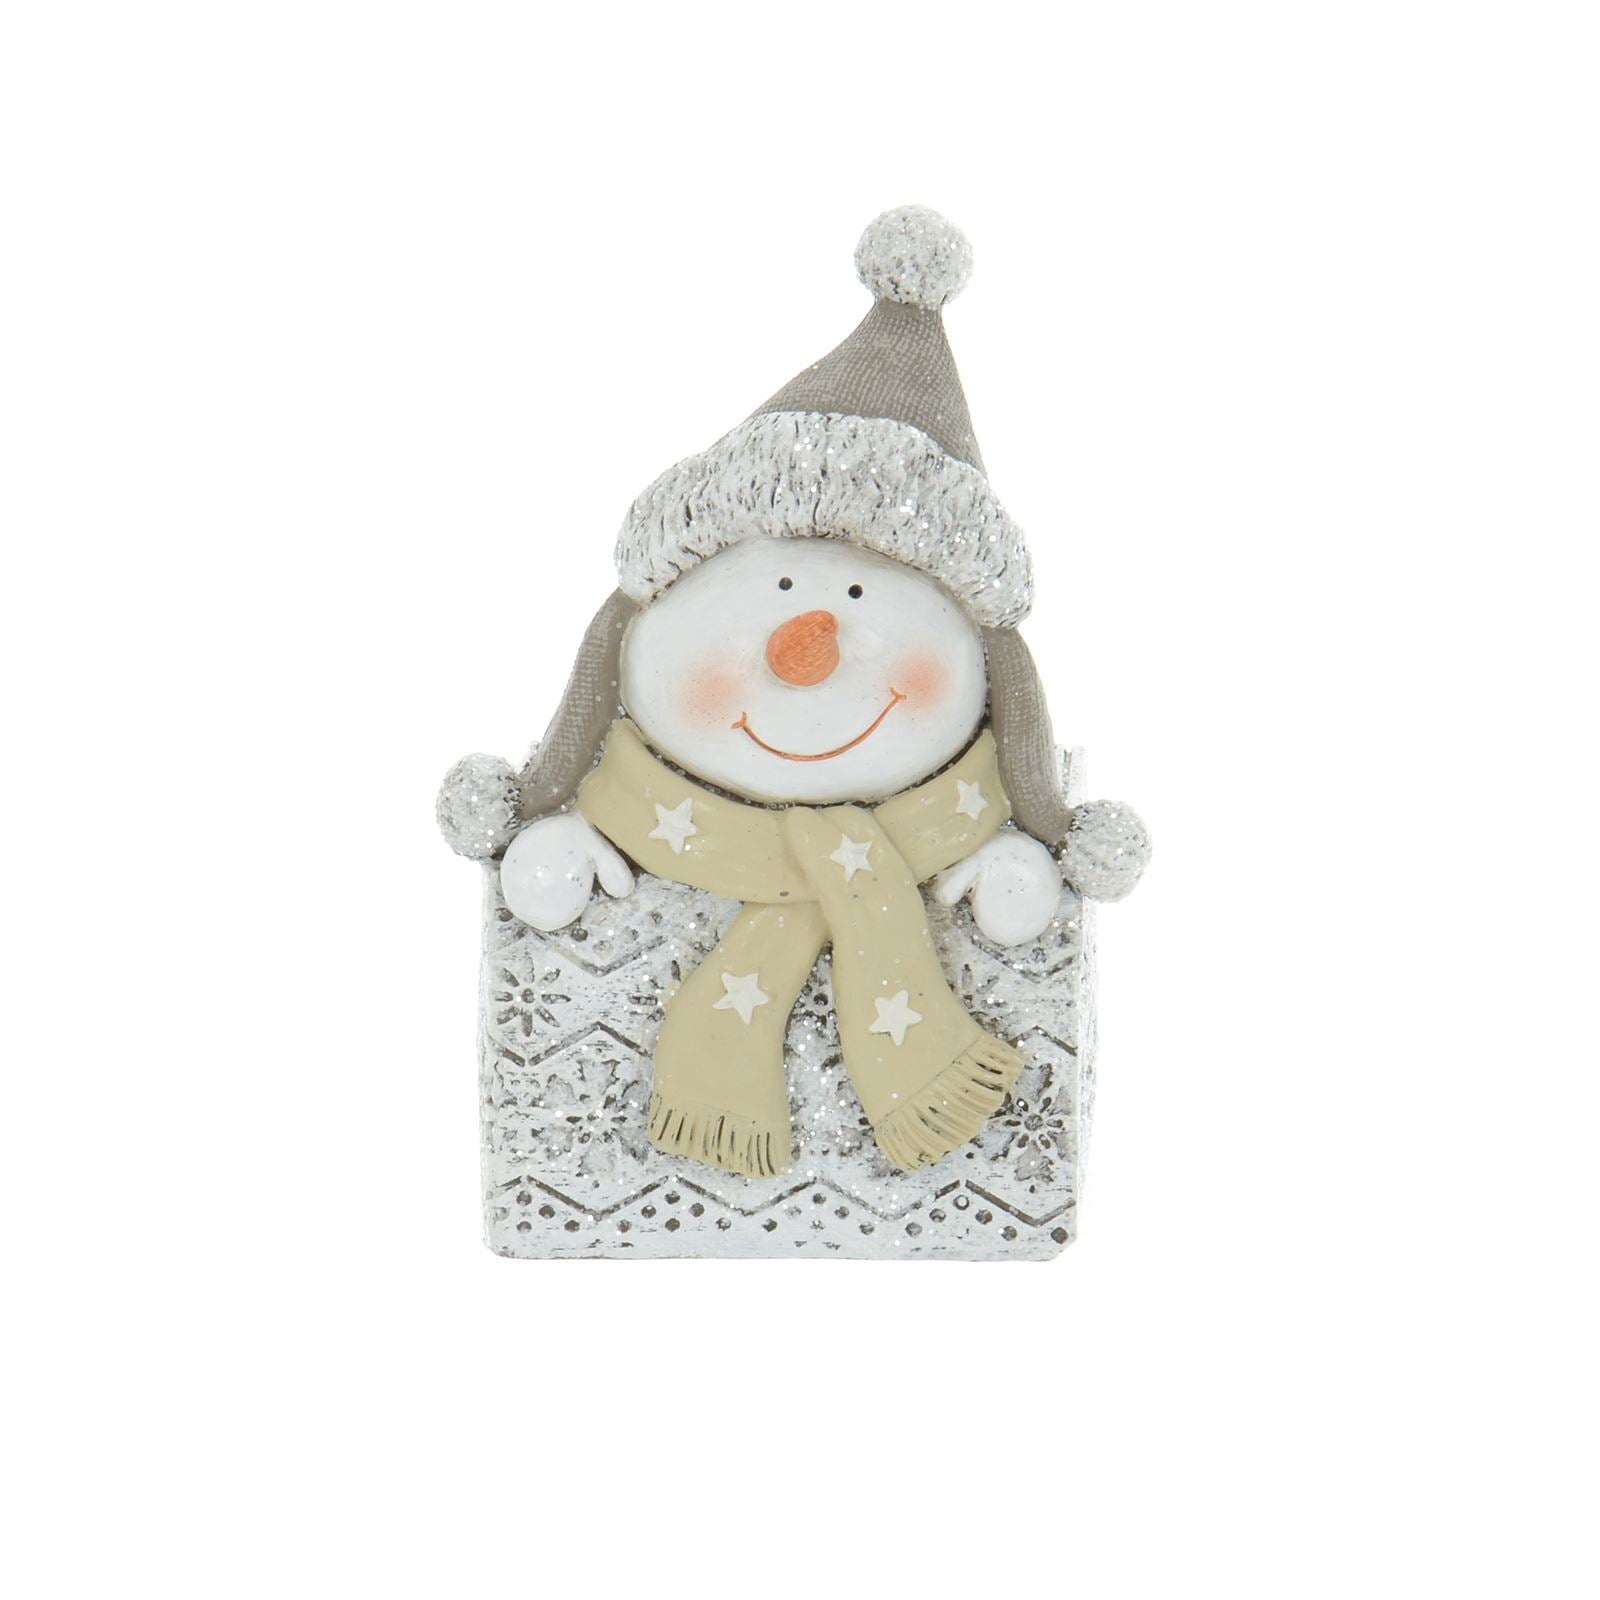 Mr Crimbo 5" Christmas Character Tealight Holders Novelty - MrCrimbo.co.uk -XS5150 - Snowman -candle holders